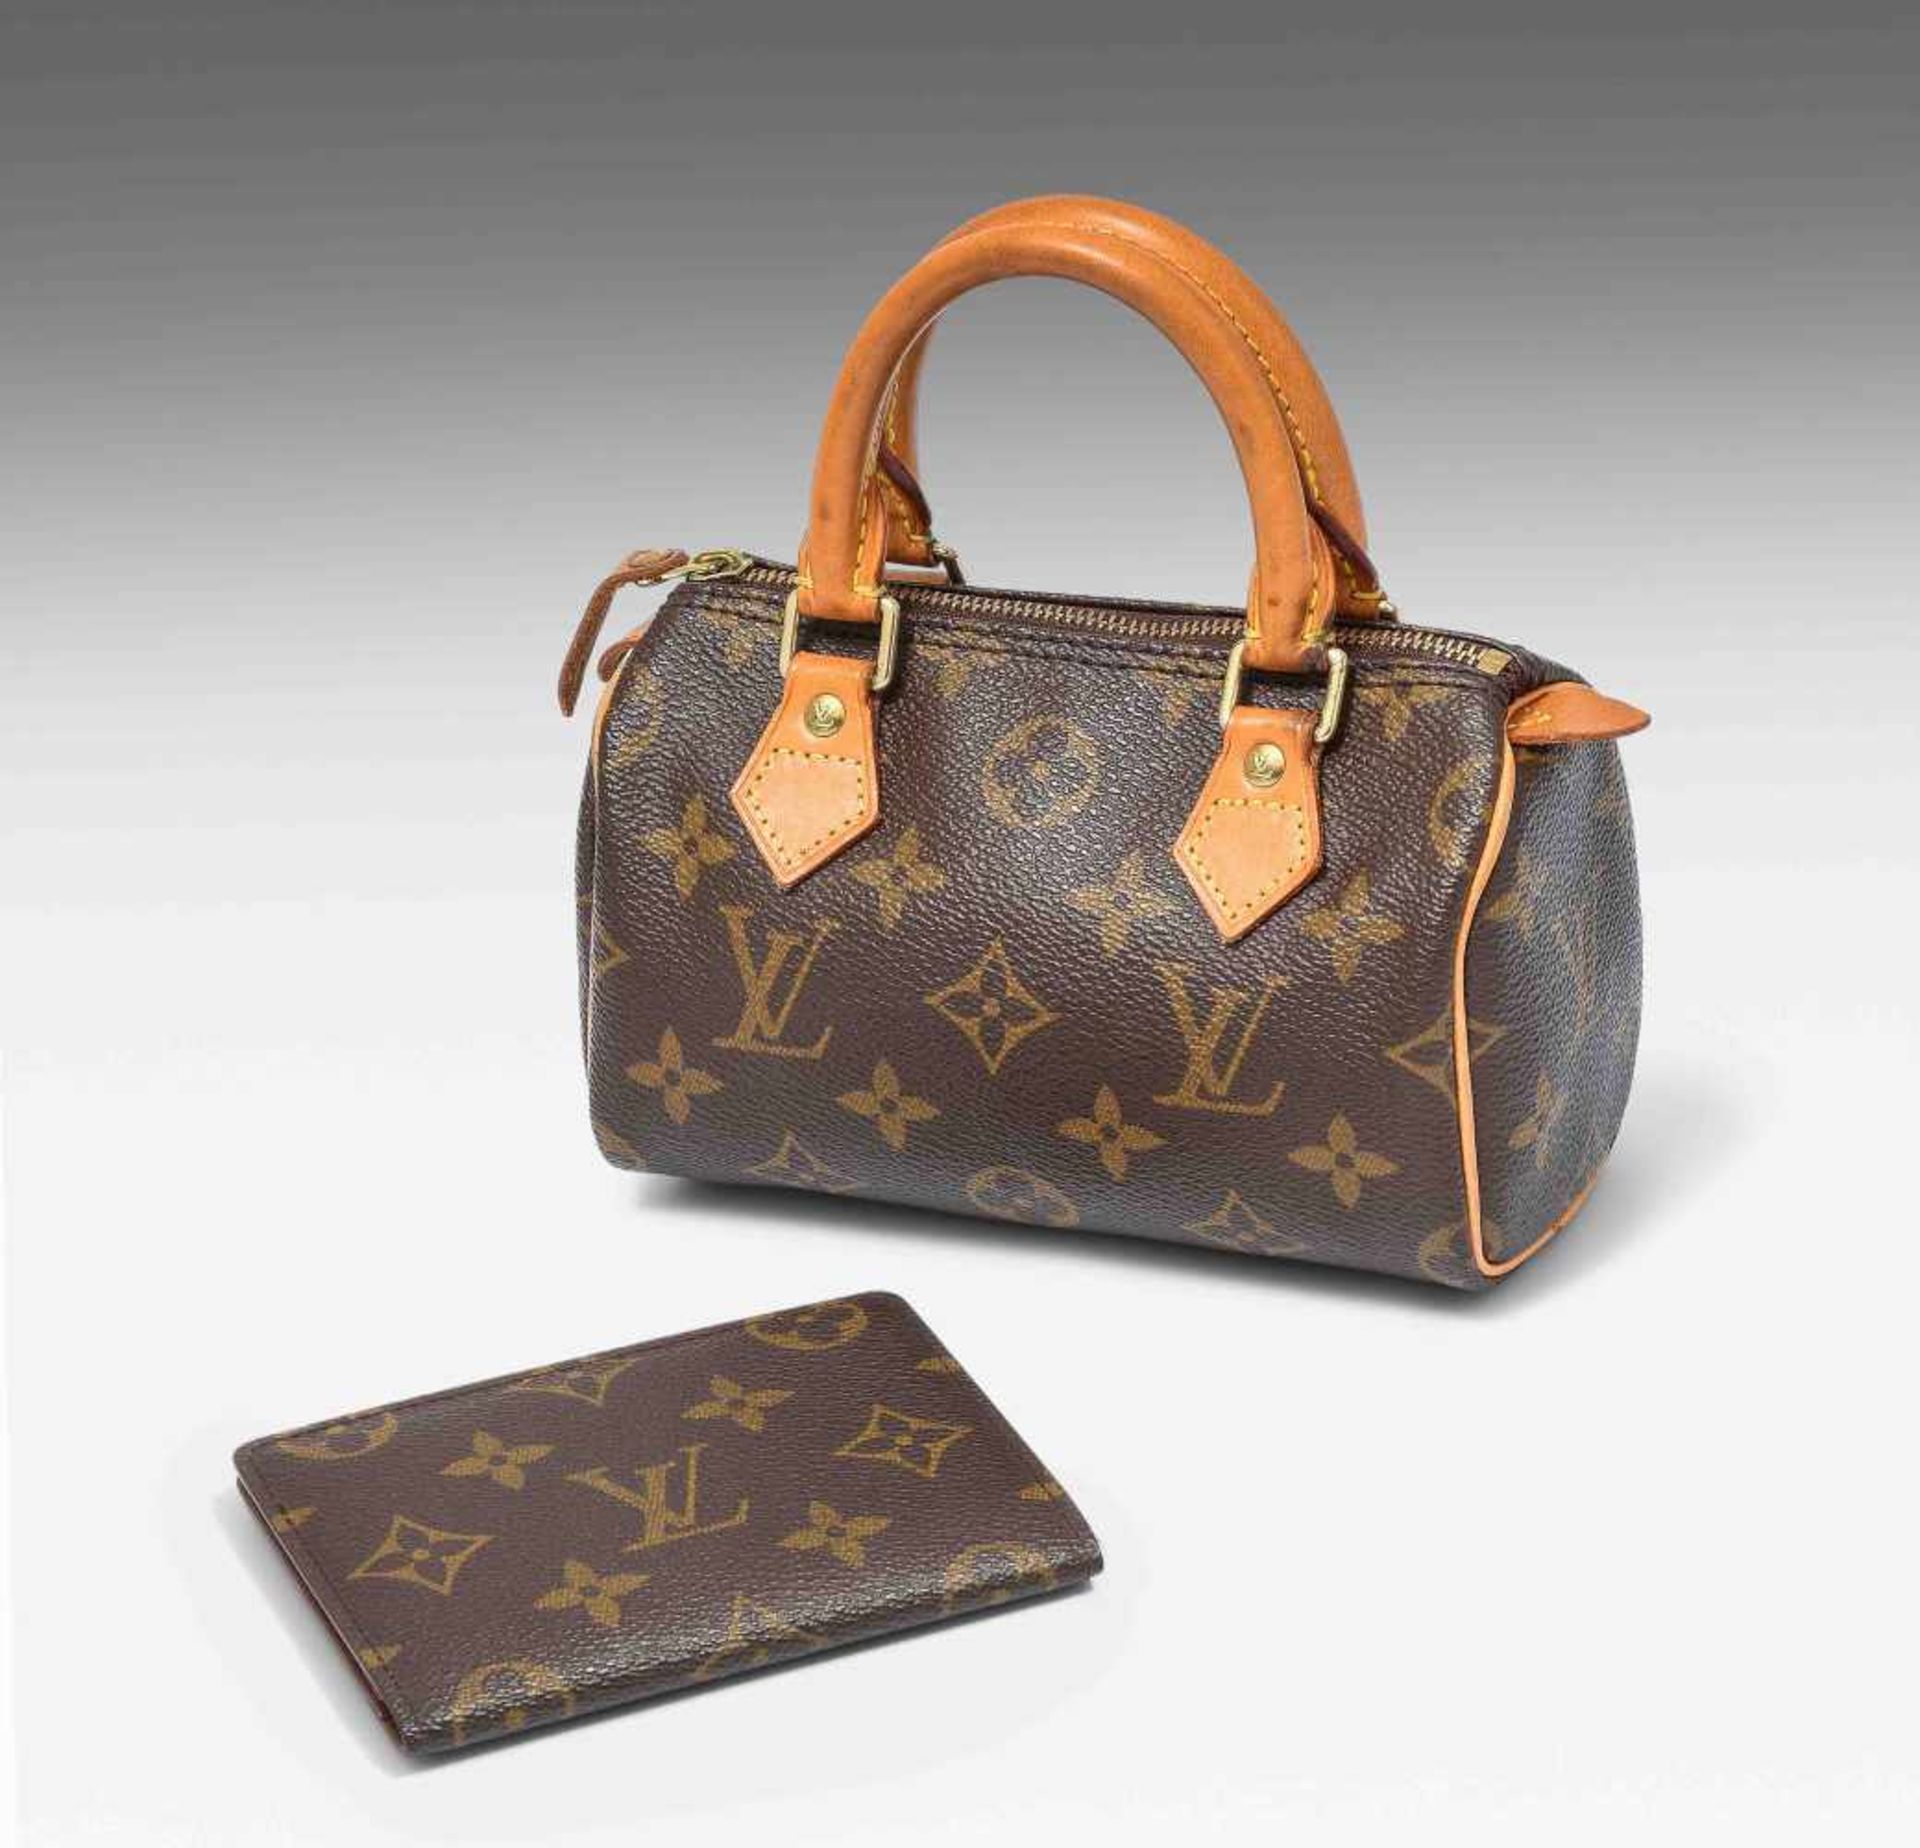 Louis Vuitton, "Mini sac HL"Mini Speedy aus Mongram Canvas. Reissverschluss. 16x10x7 cm. Mit